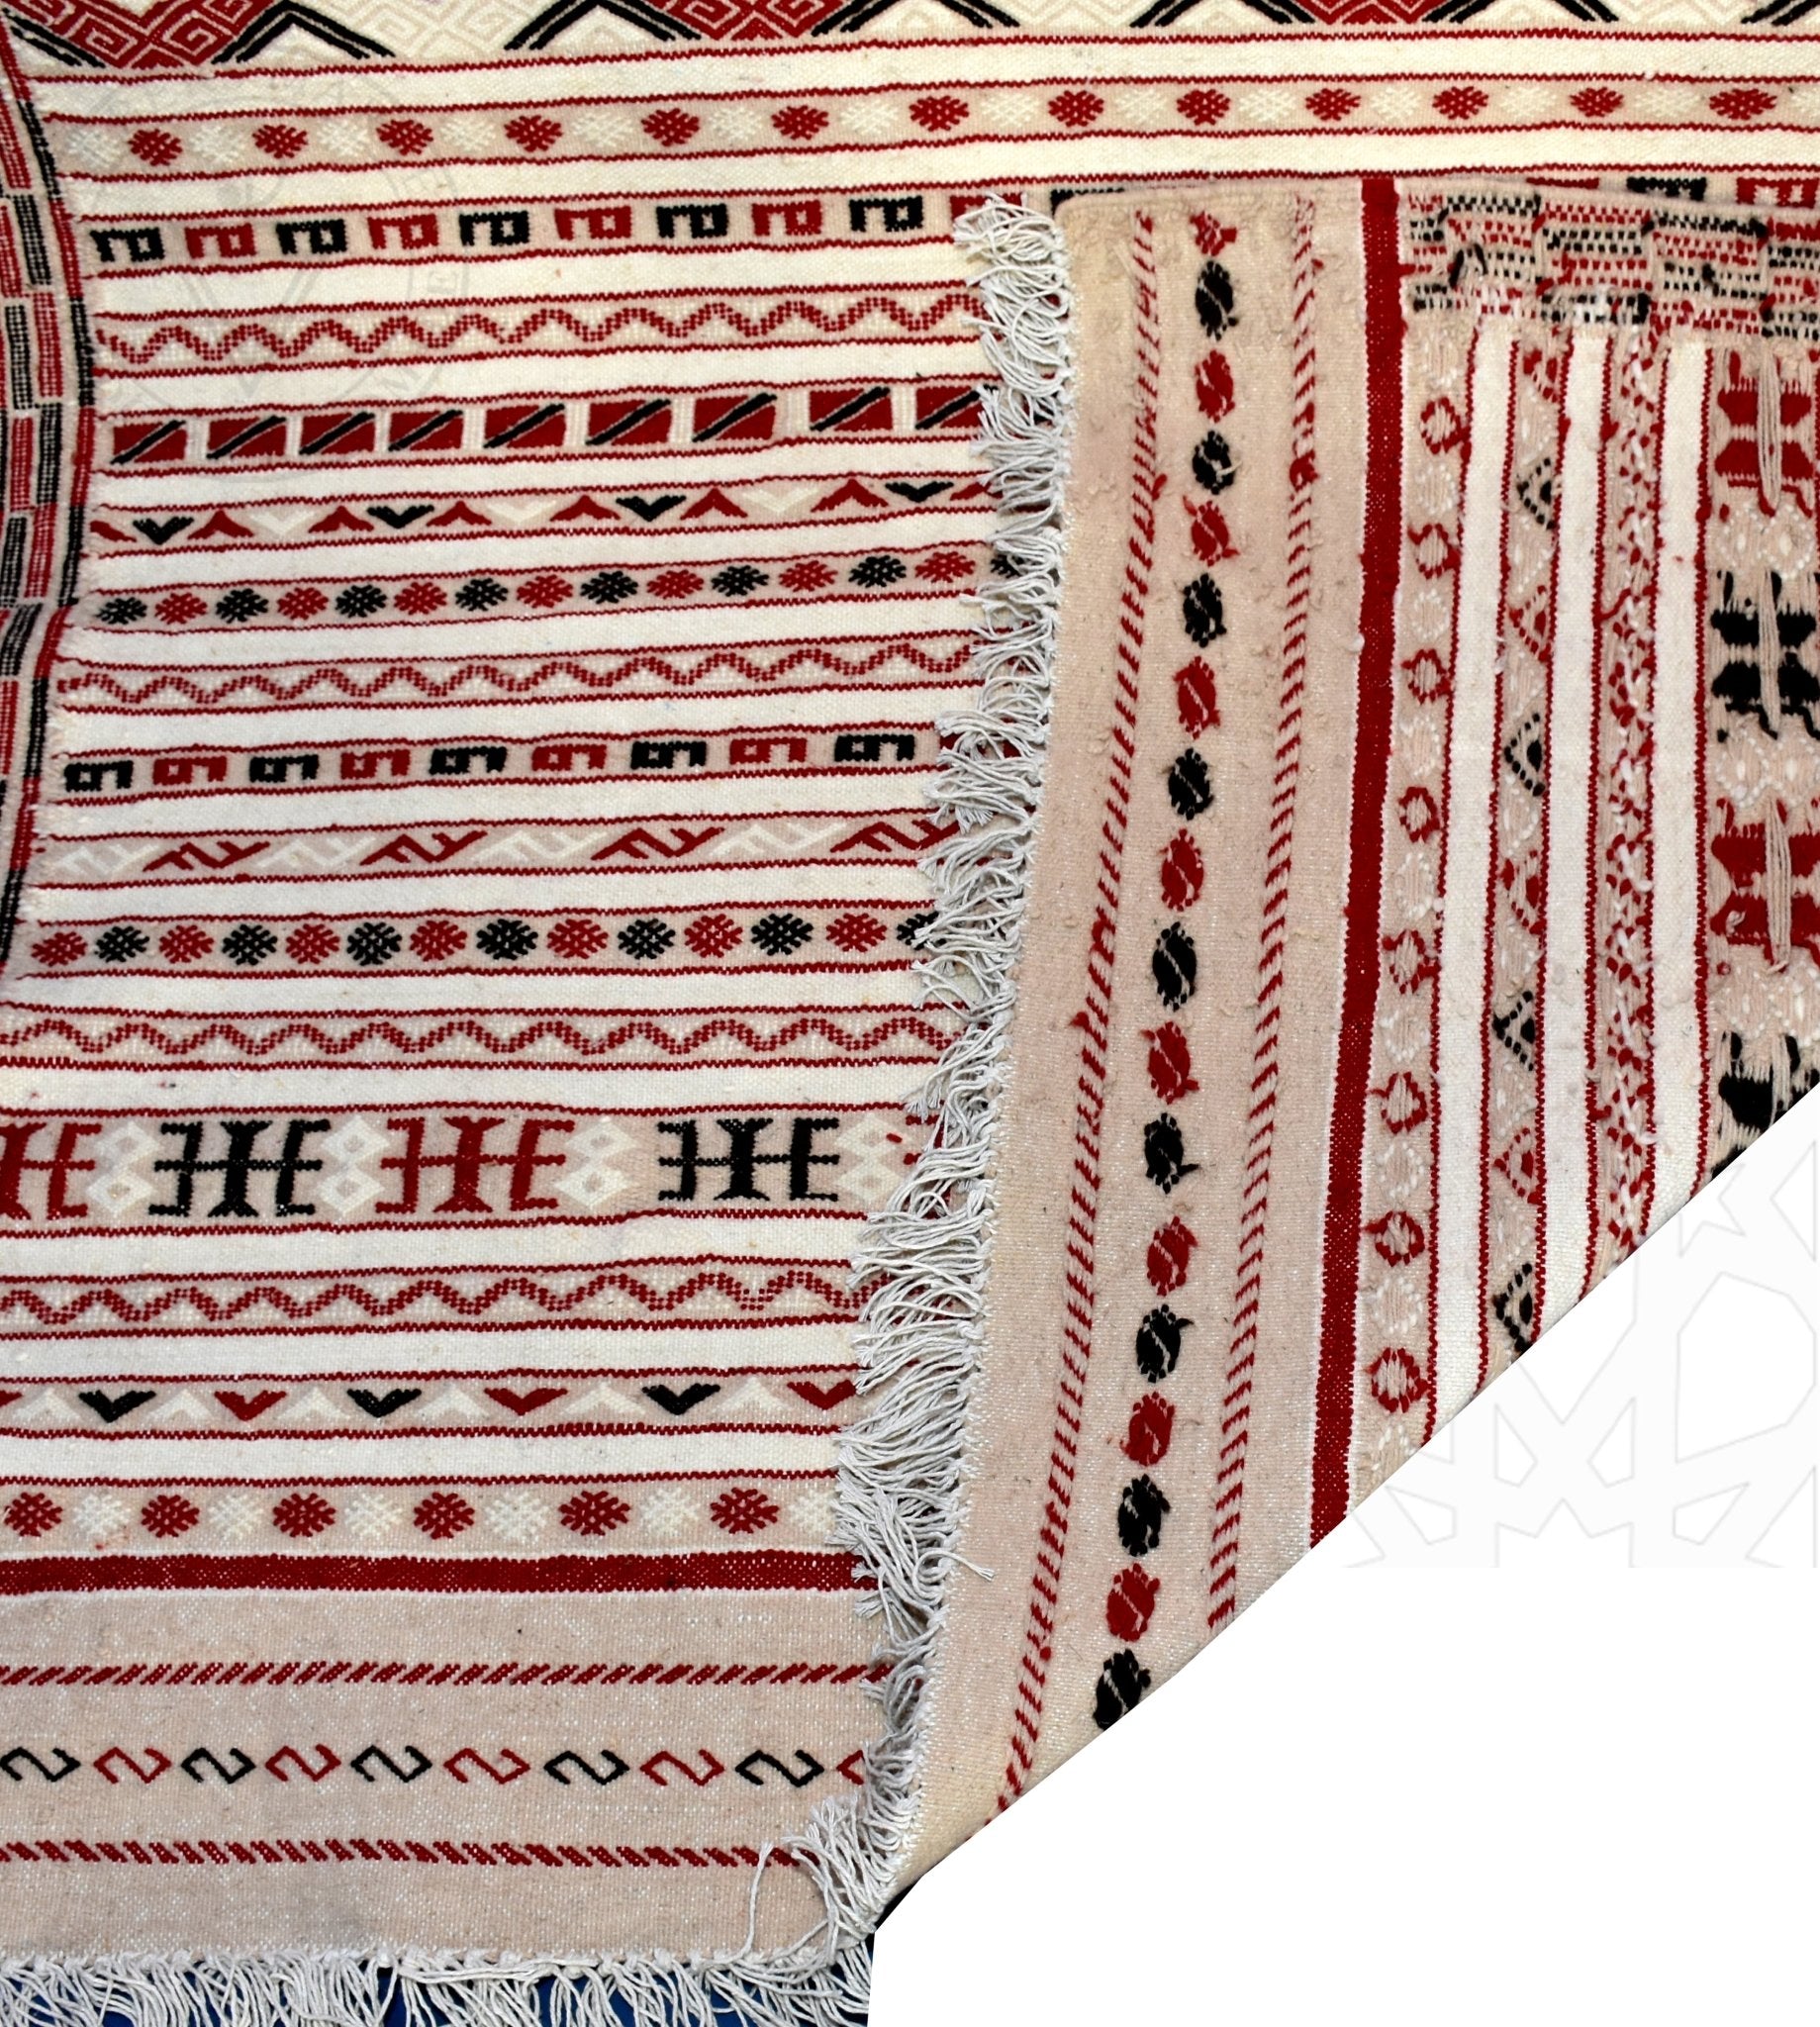 Flatweave kilim hanbal Moroccan rug - 4.94 x 7.06 ft / 150 x 215 cm - Berbers Market